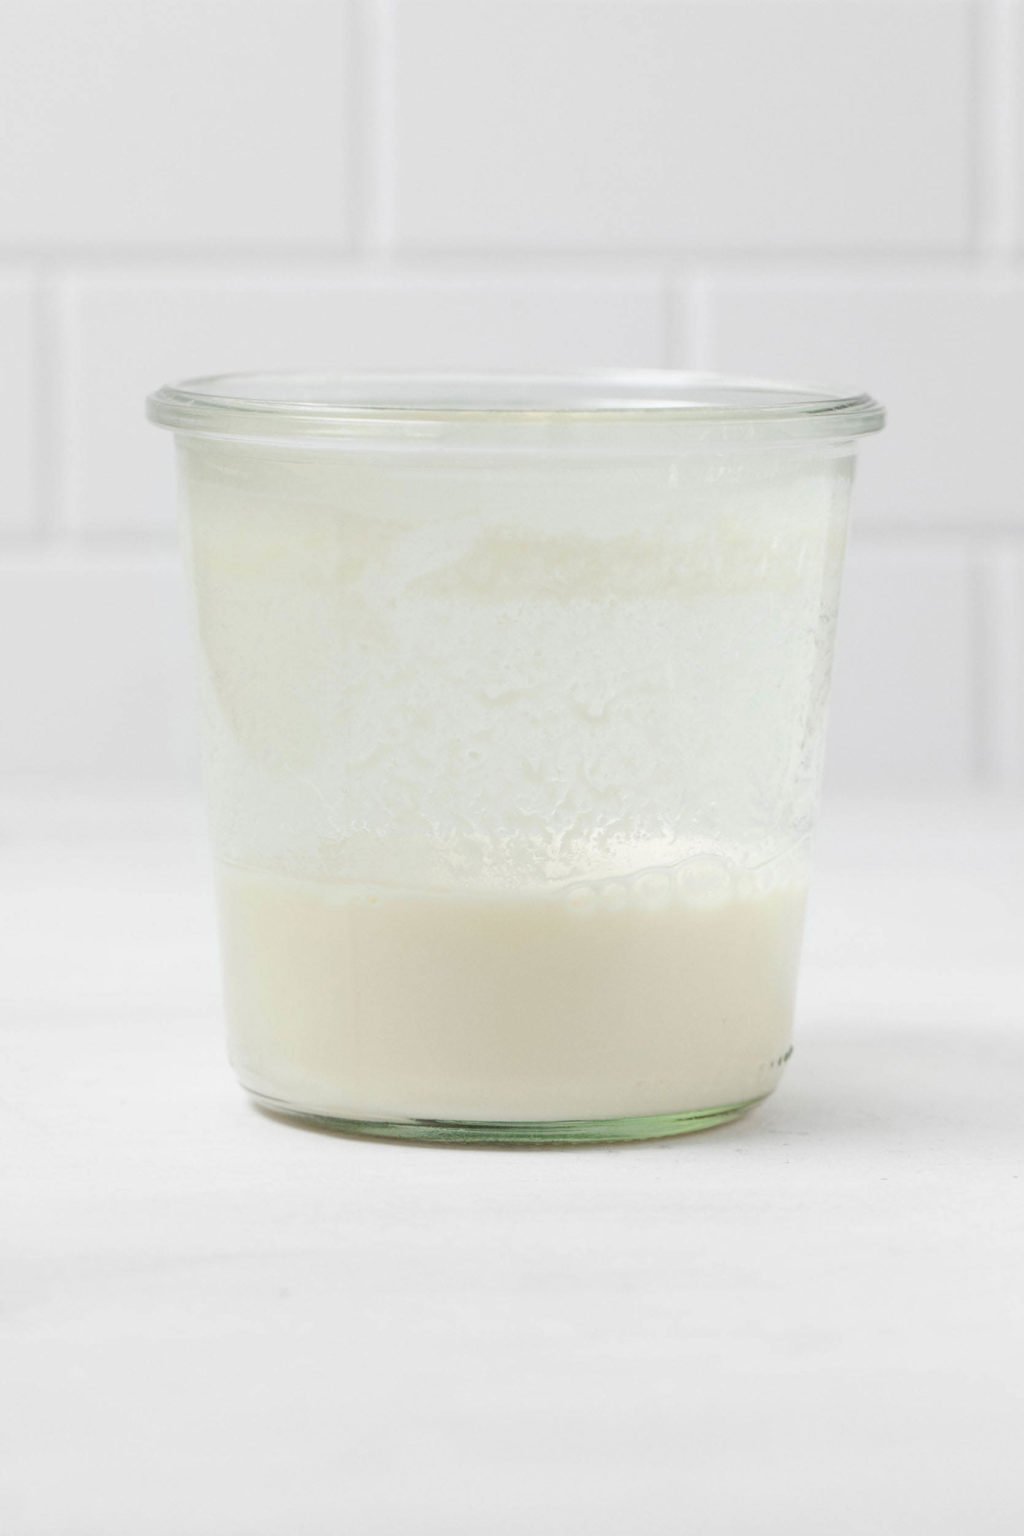 Un frasco de vidrio de suero de leche vegano casero descansa sobre una superficie blanca.